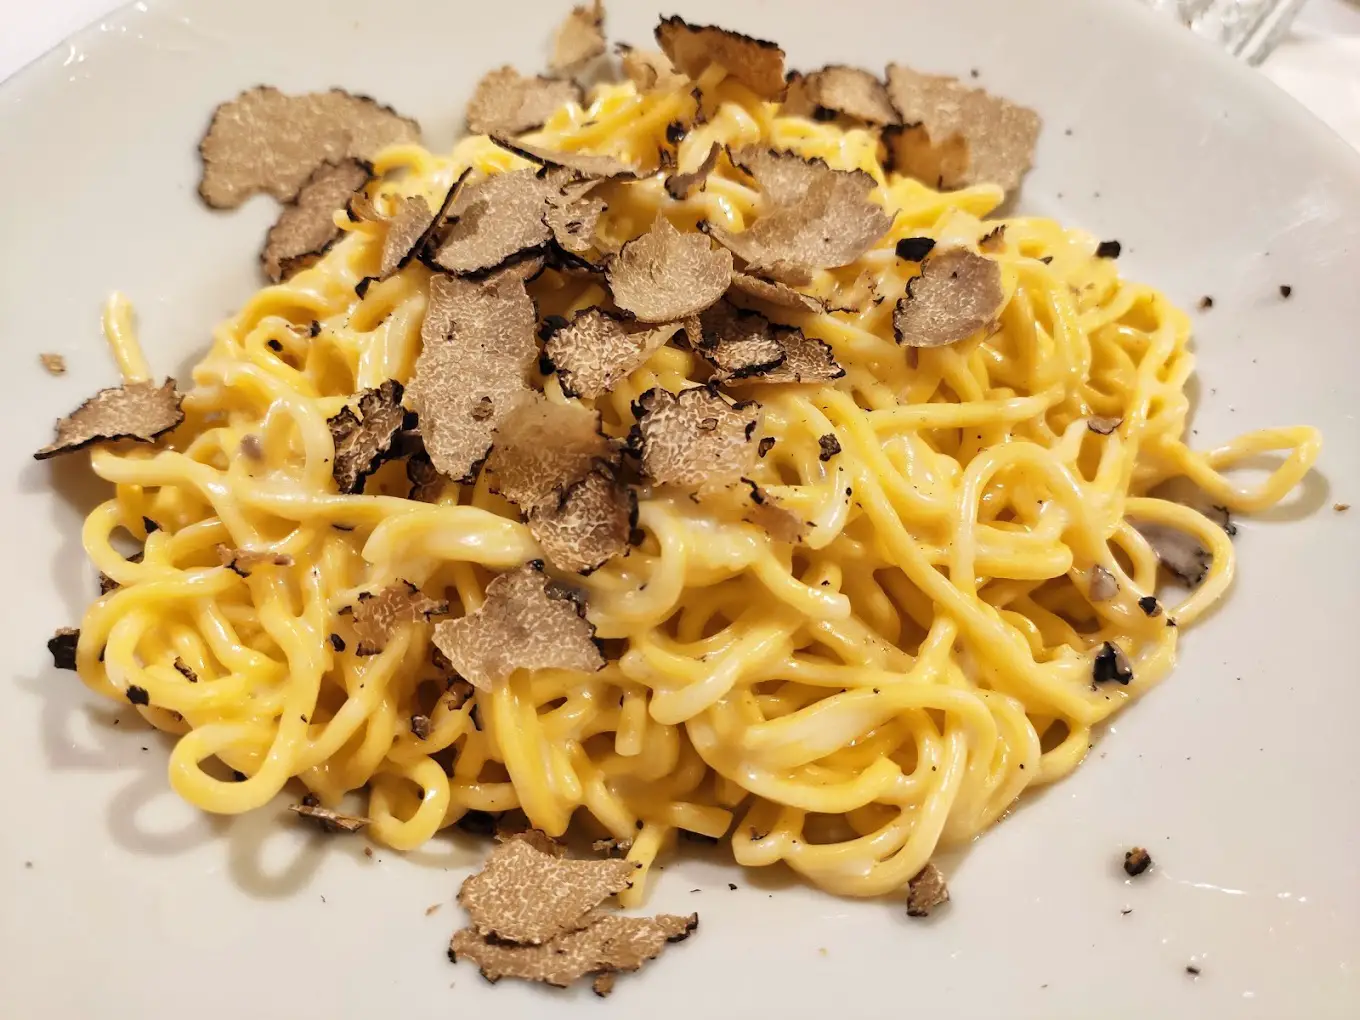 Image of a truffle pasta dish at I’Brindellone restaurant